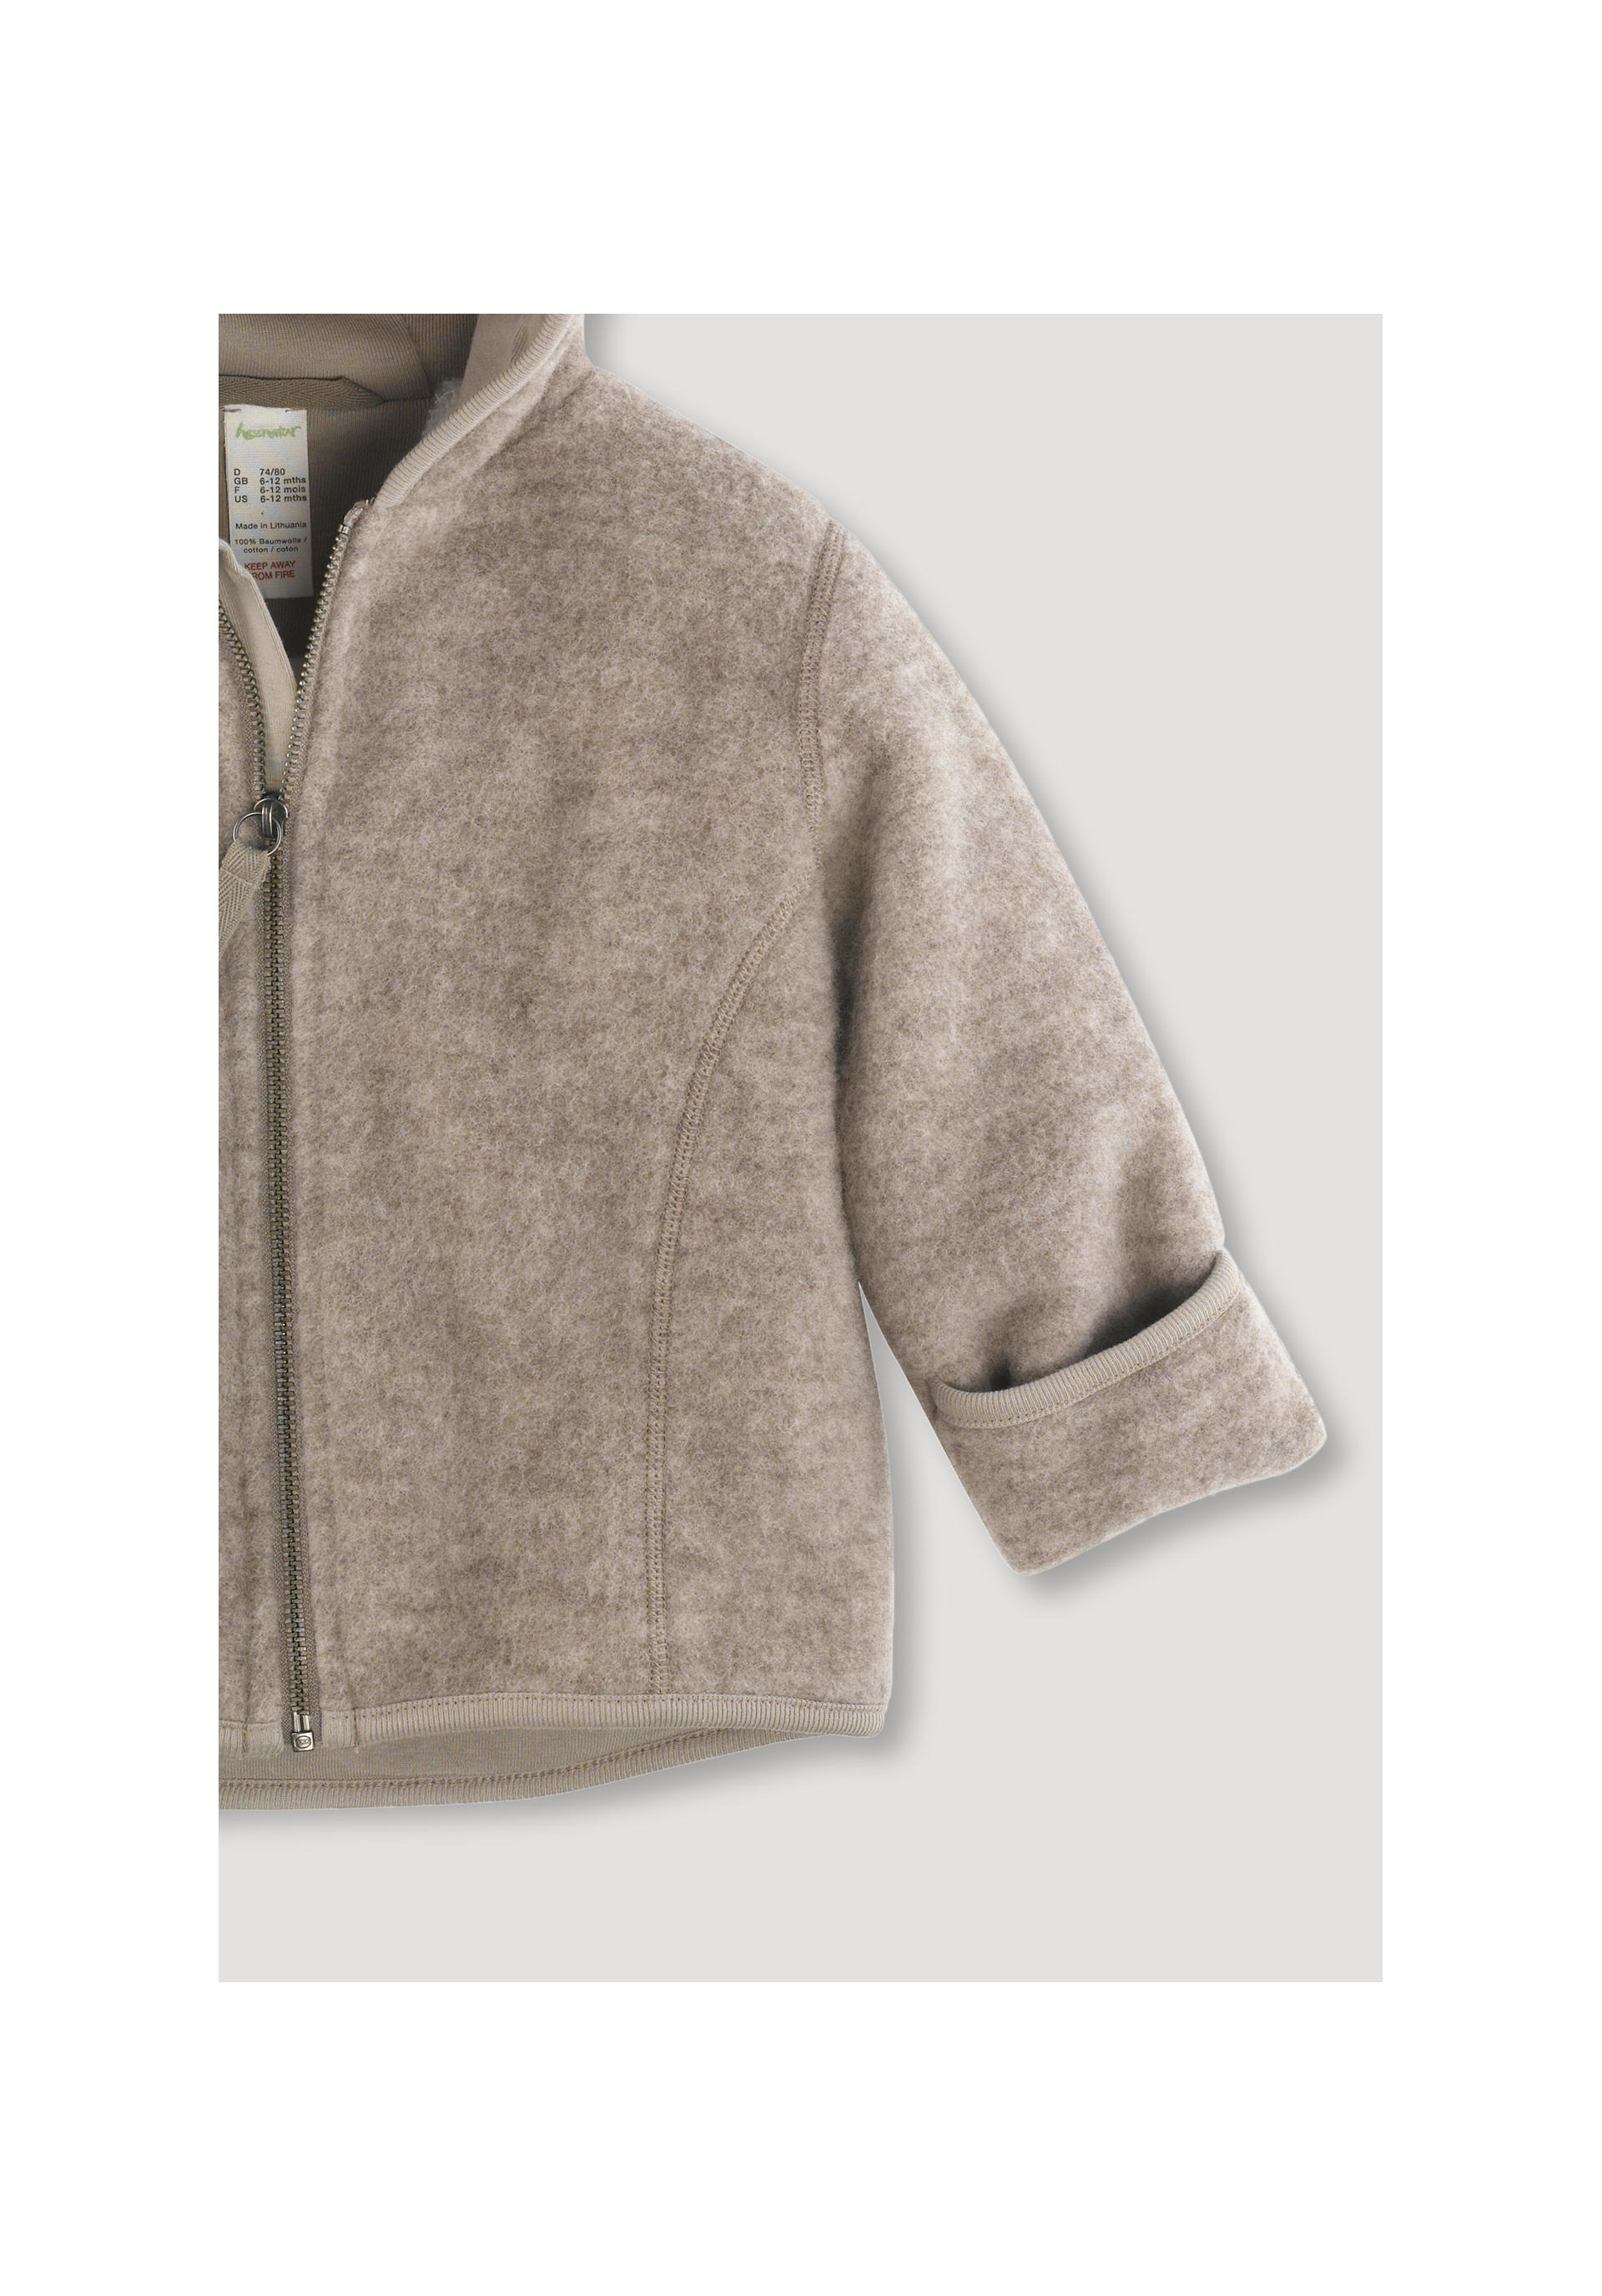 Wool fleece jacket made from pure organic merino wool for babies -  hessnatur Deutschland